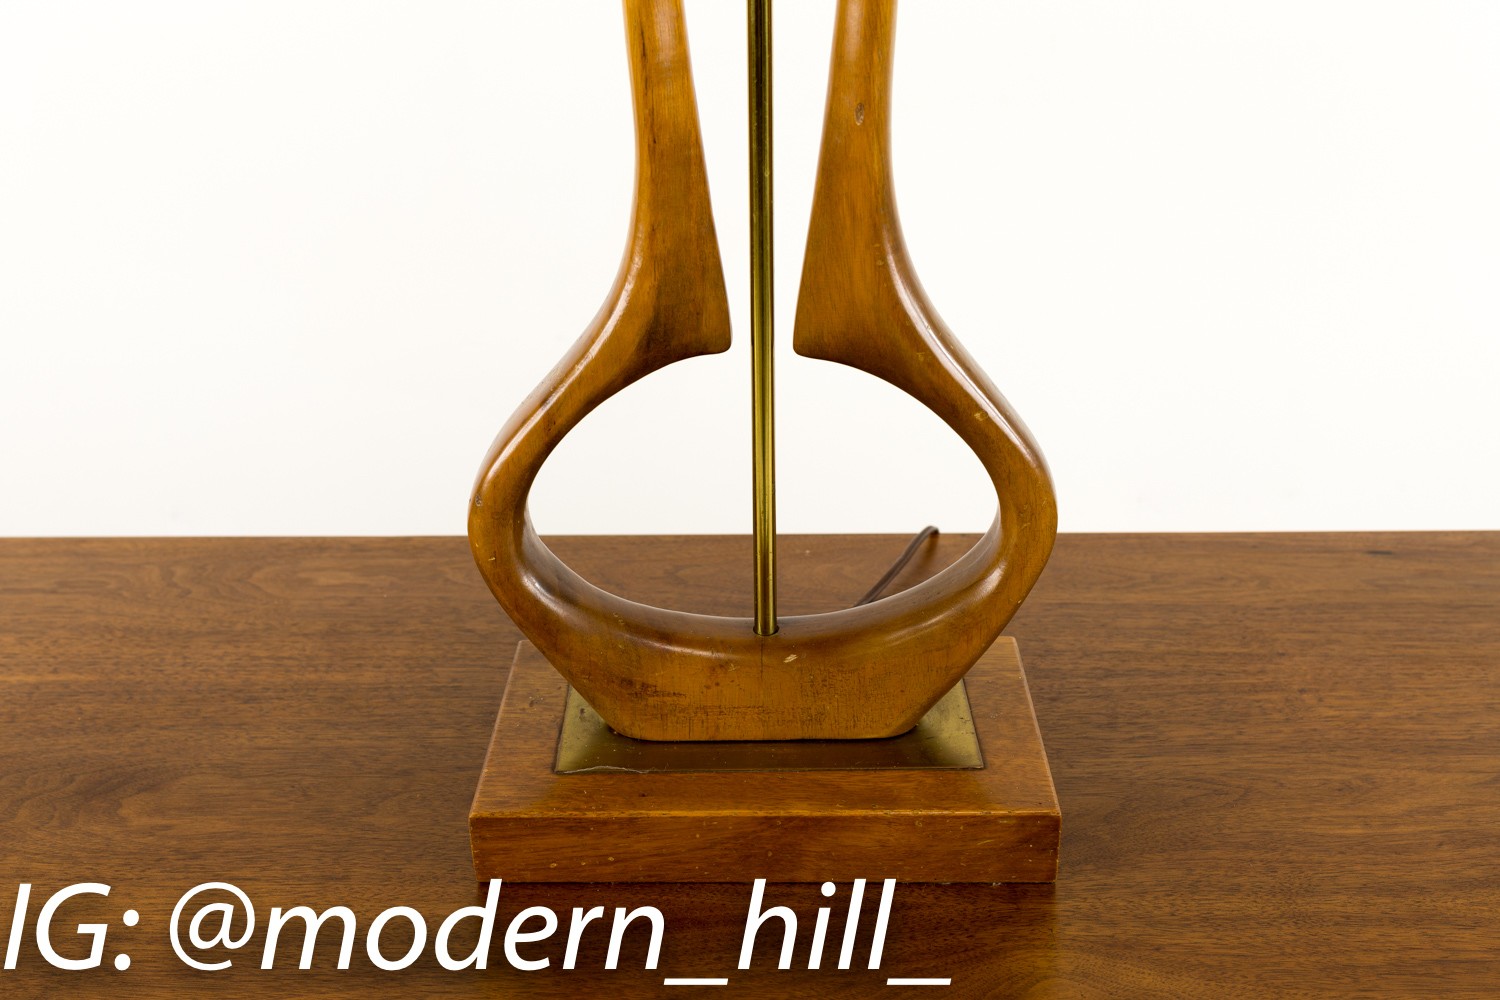 Unique Mid-century Wood Table Lamp